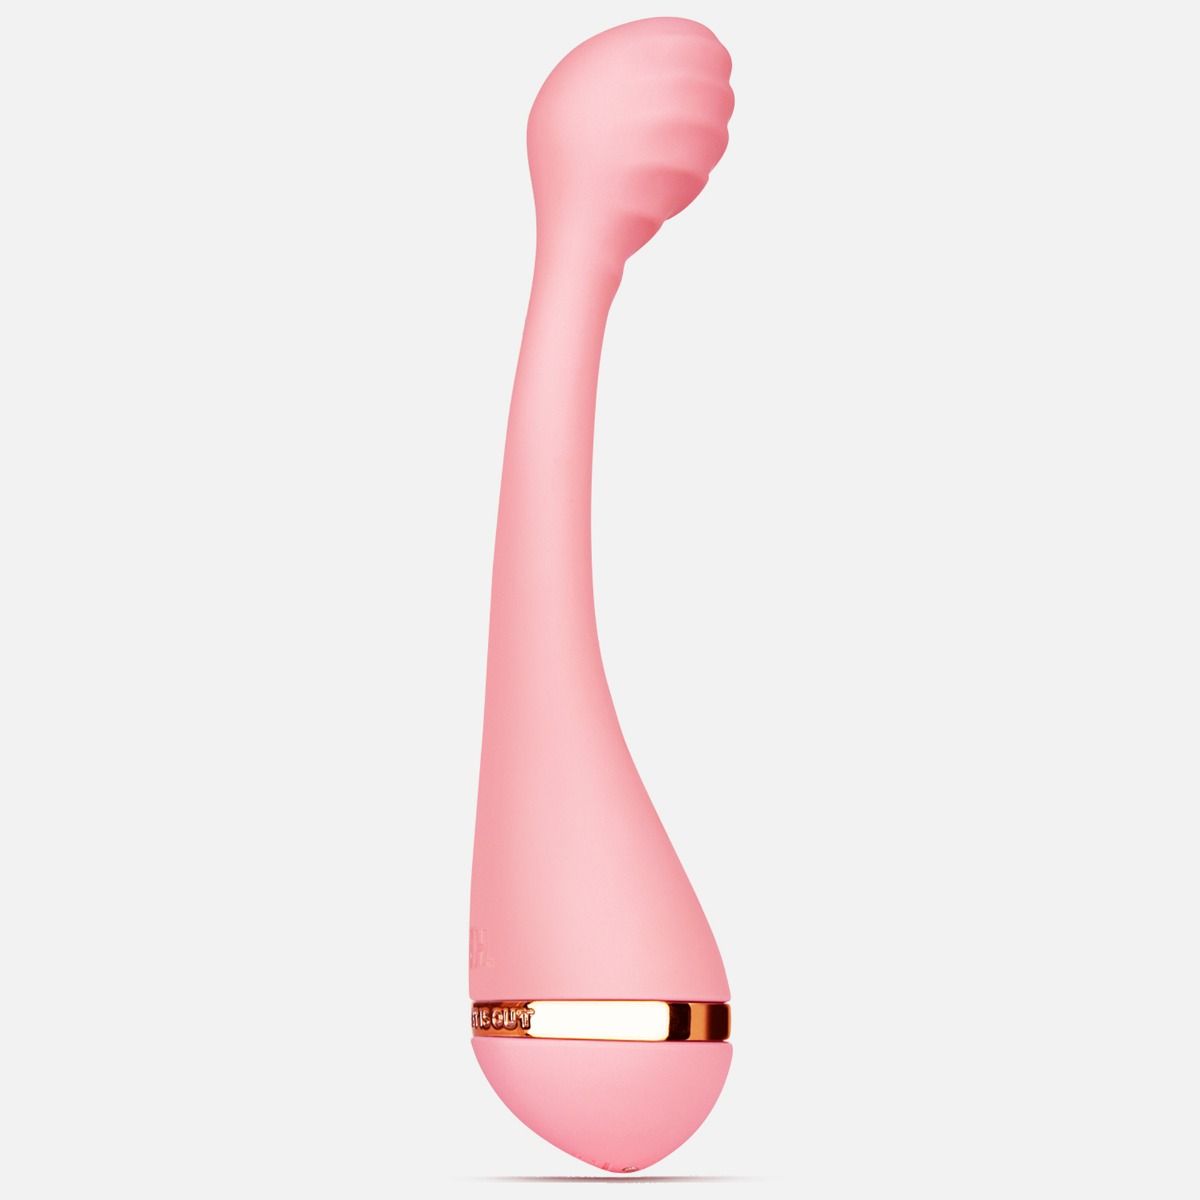 Vush - G spot vibrator for masturbation